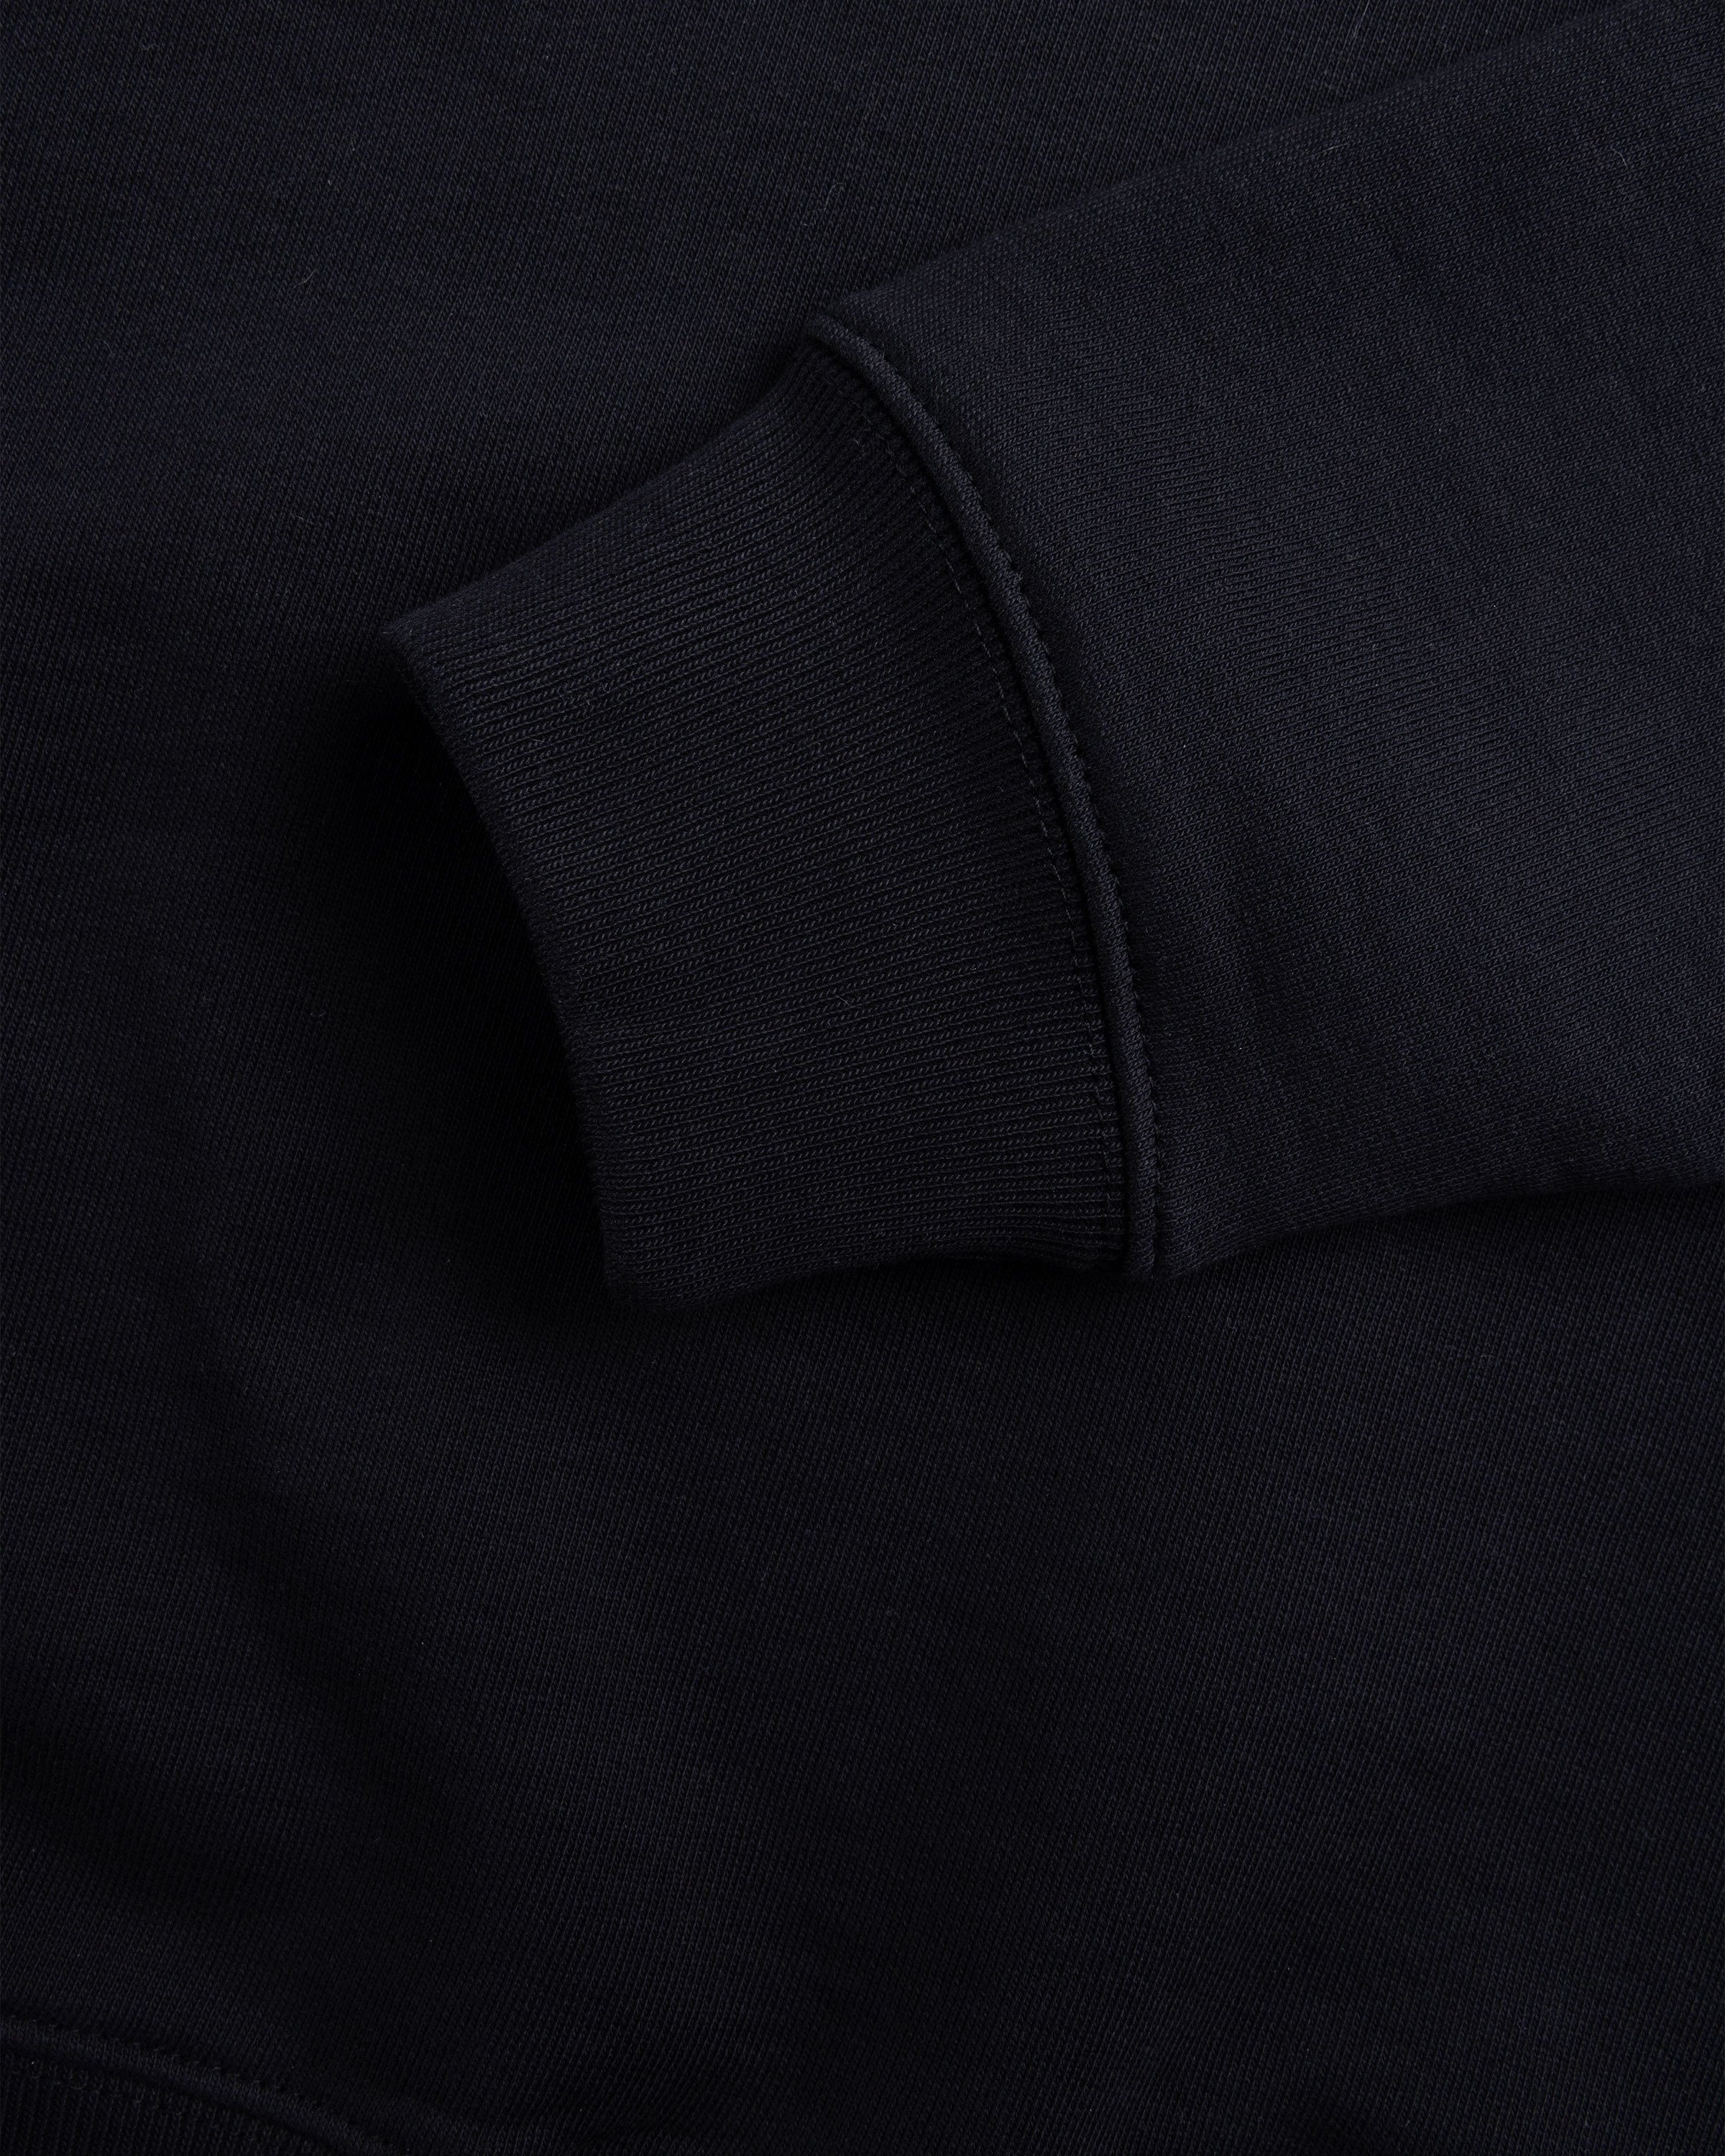 Dries van Noten - HAFFEL 8610 M.K.SWEATER BLACK - Clothing - Black - Image 7